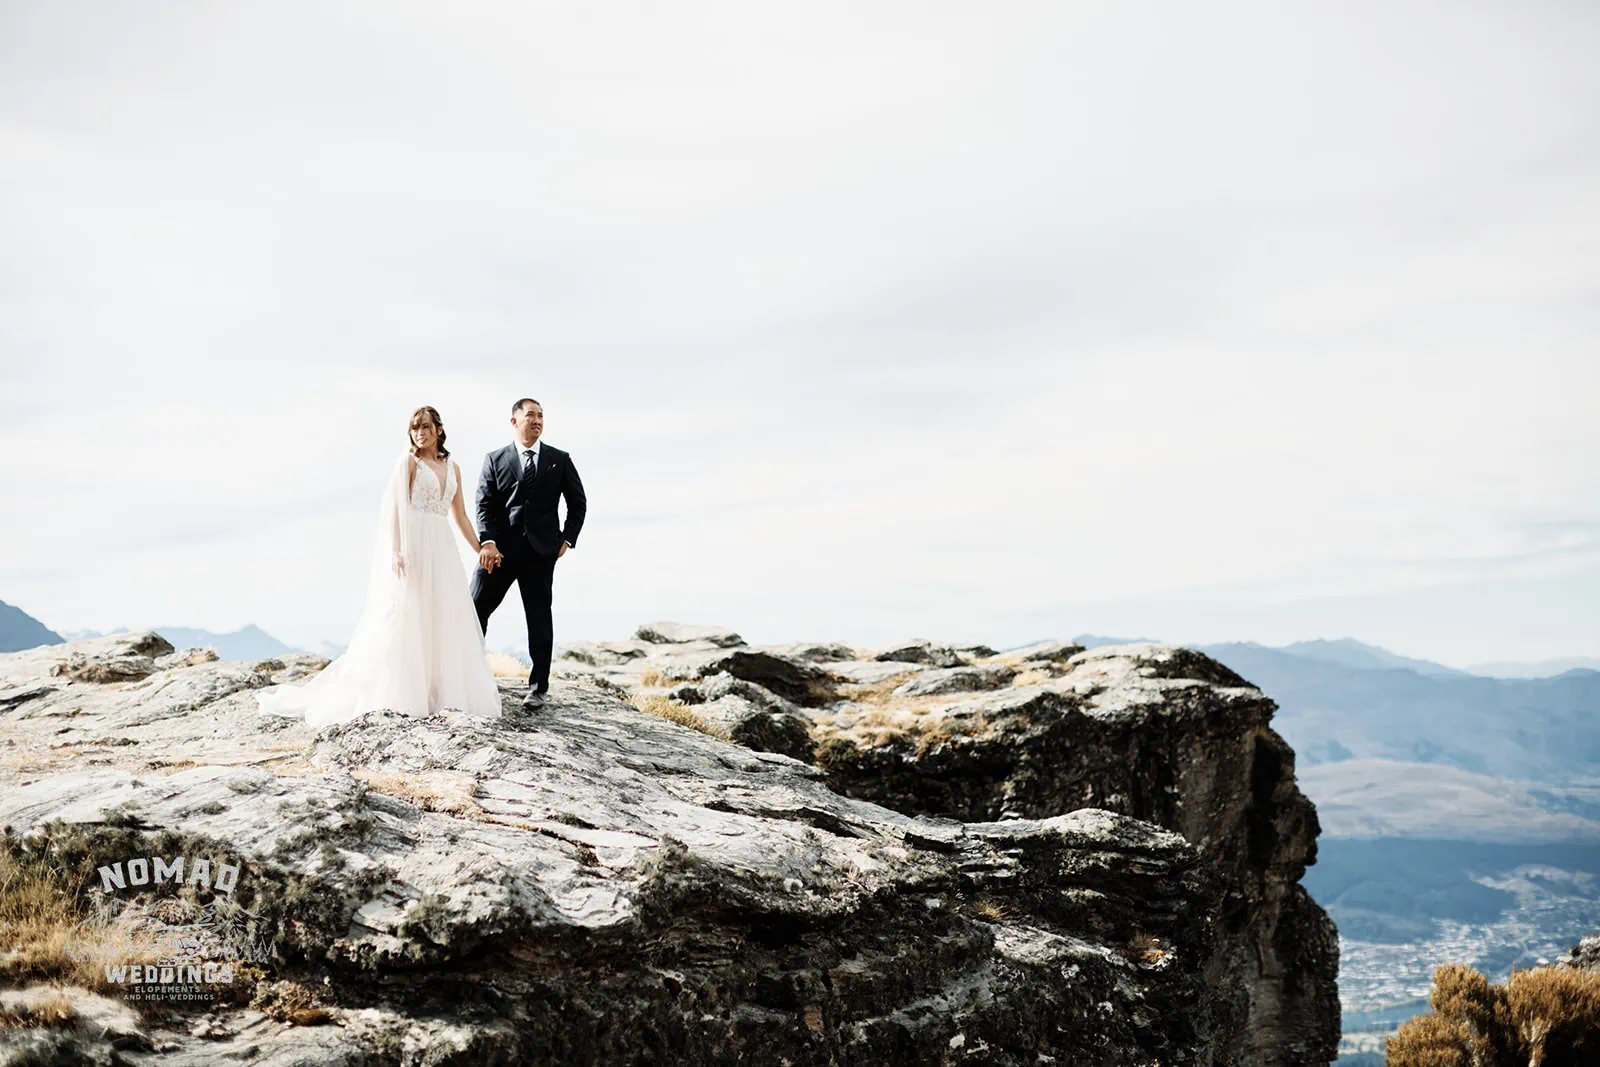 Nhi & Nicholas' Queenstown NZ Cecil Peak Pre-Wedding Shoot on a mountain top.